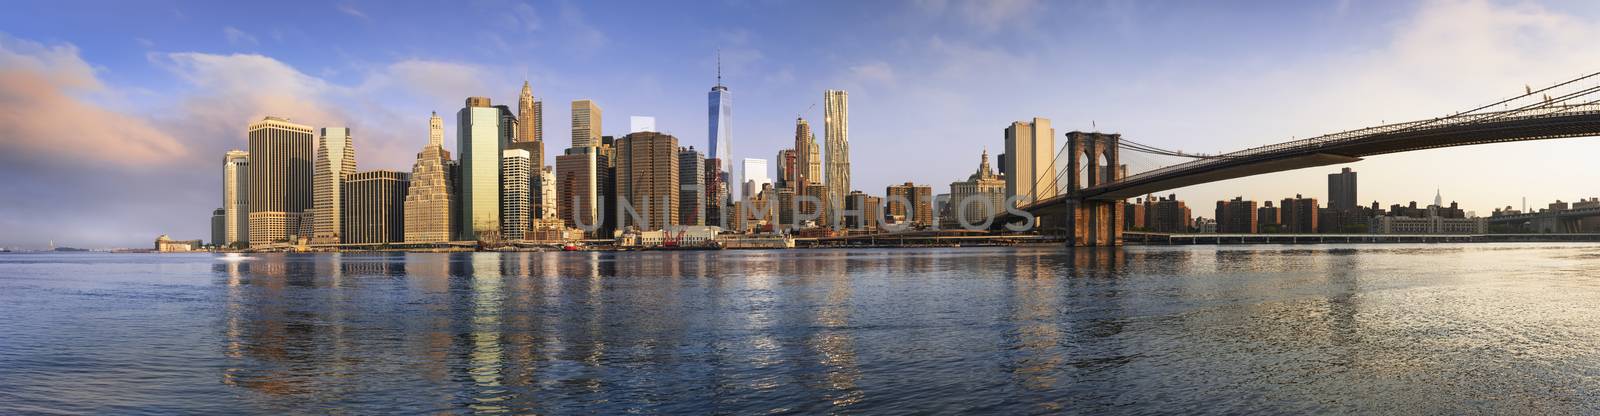 New York panoramic  by ventdusud